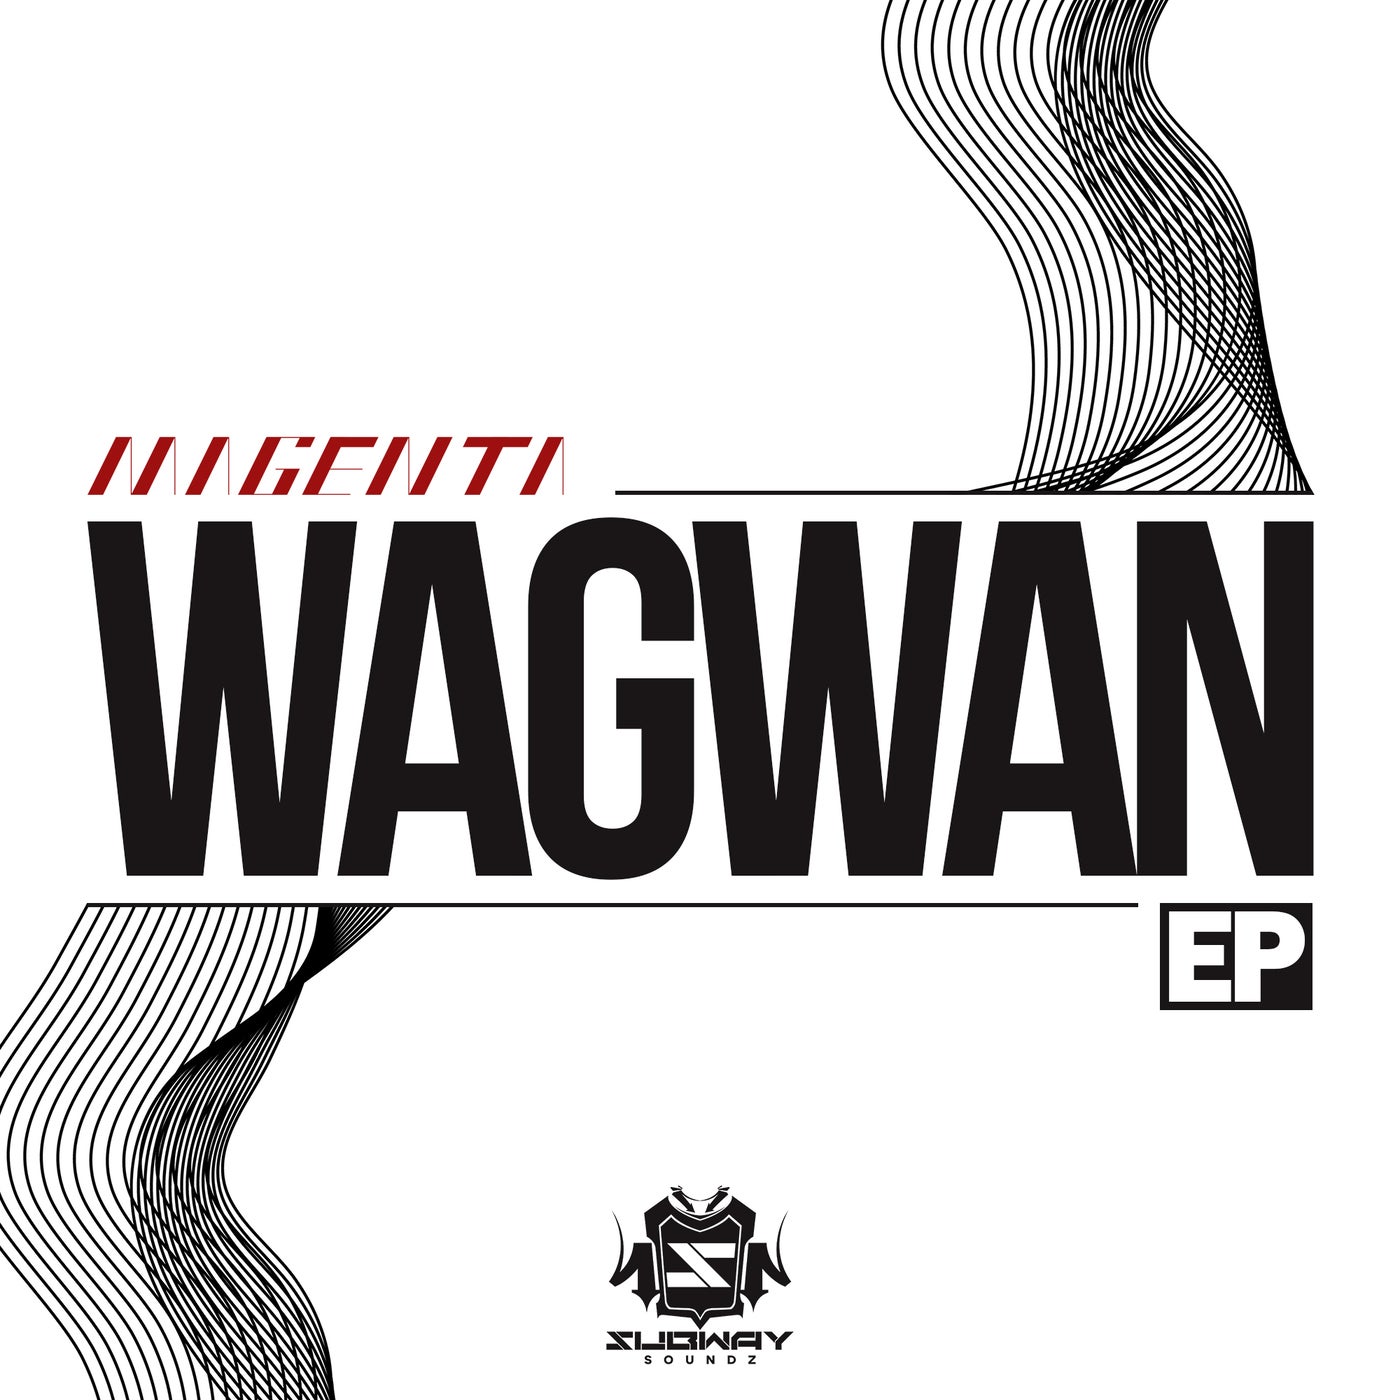 Wagwan EP